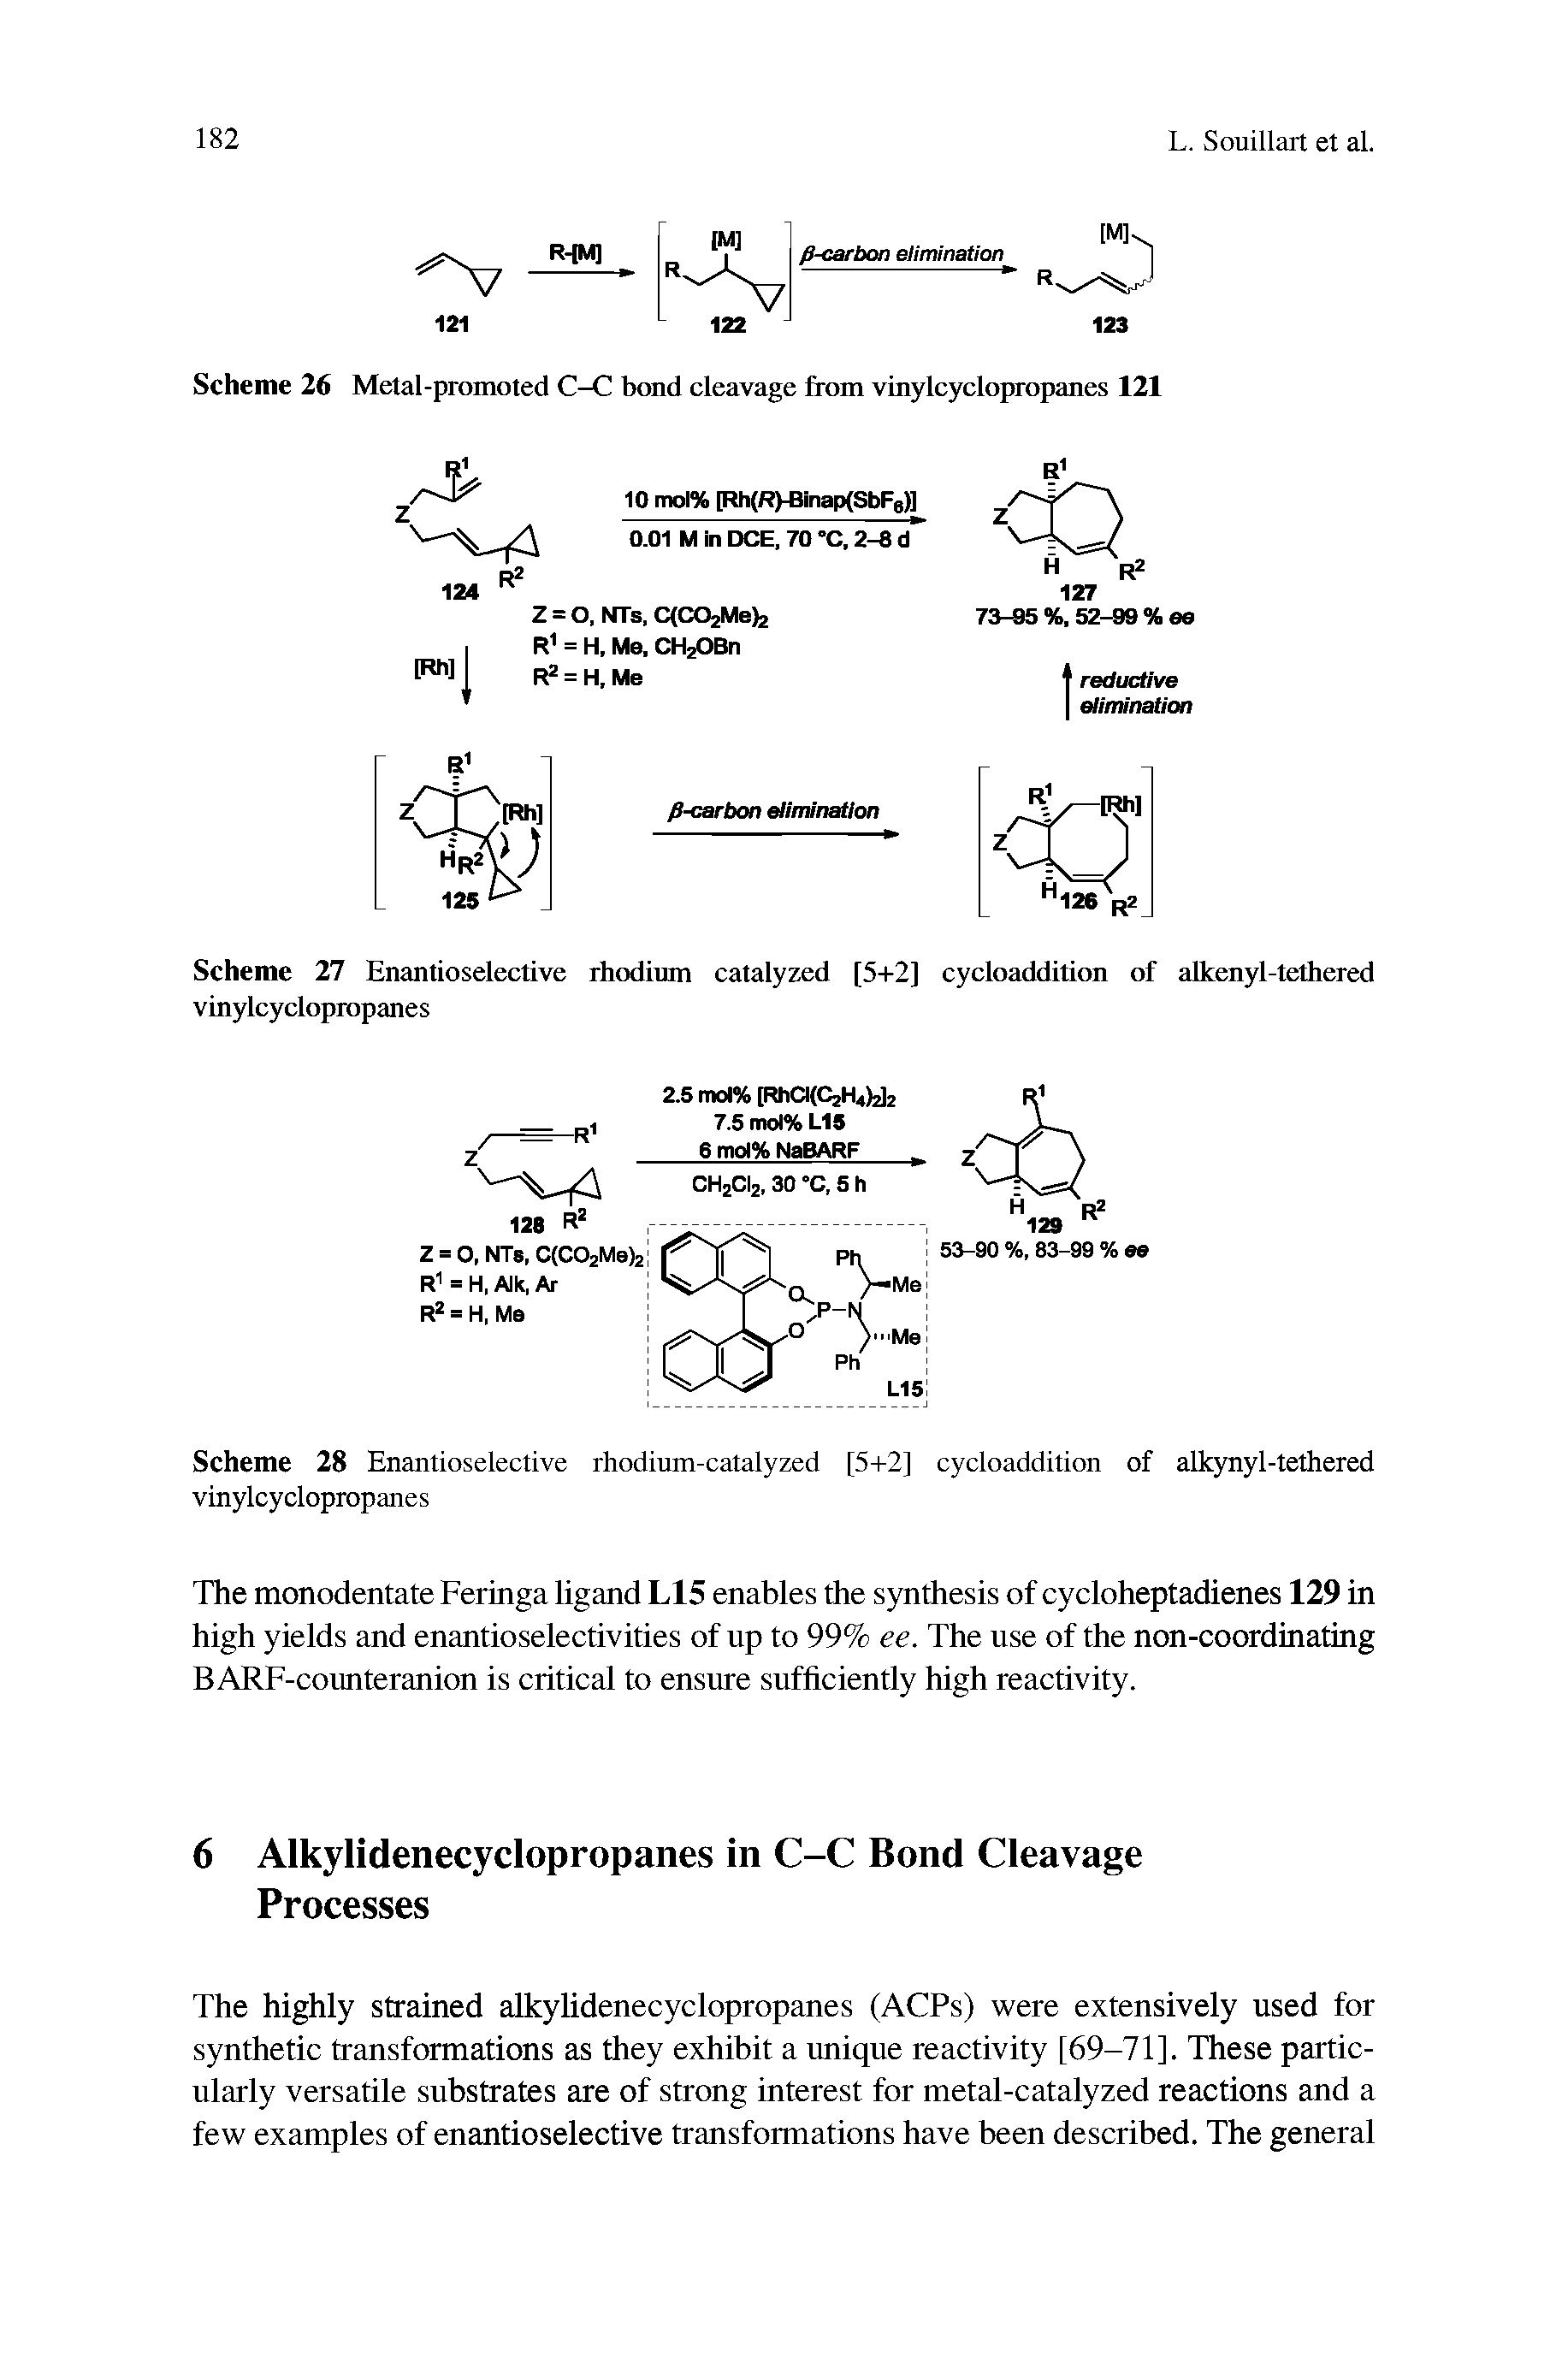 Scheme 27 Enantioselective rhodium catalyzed [5+2] cycloaddition of alkenyl-tethered vinylcyclopropanes...